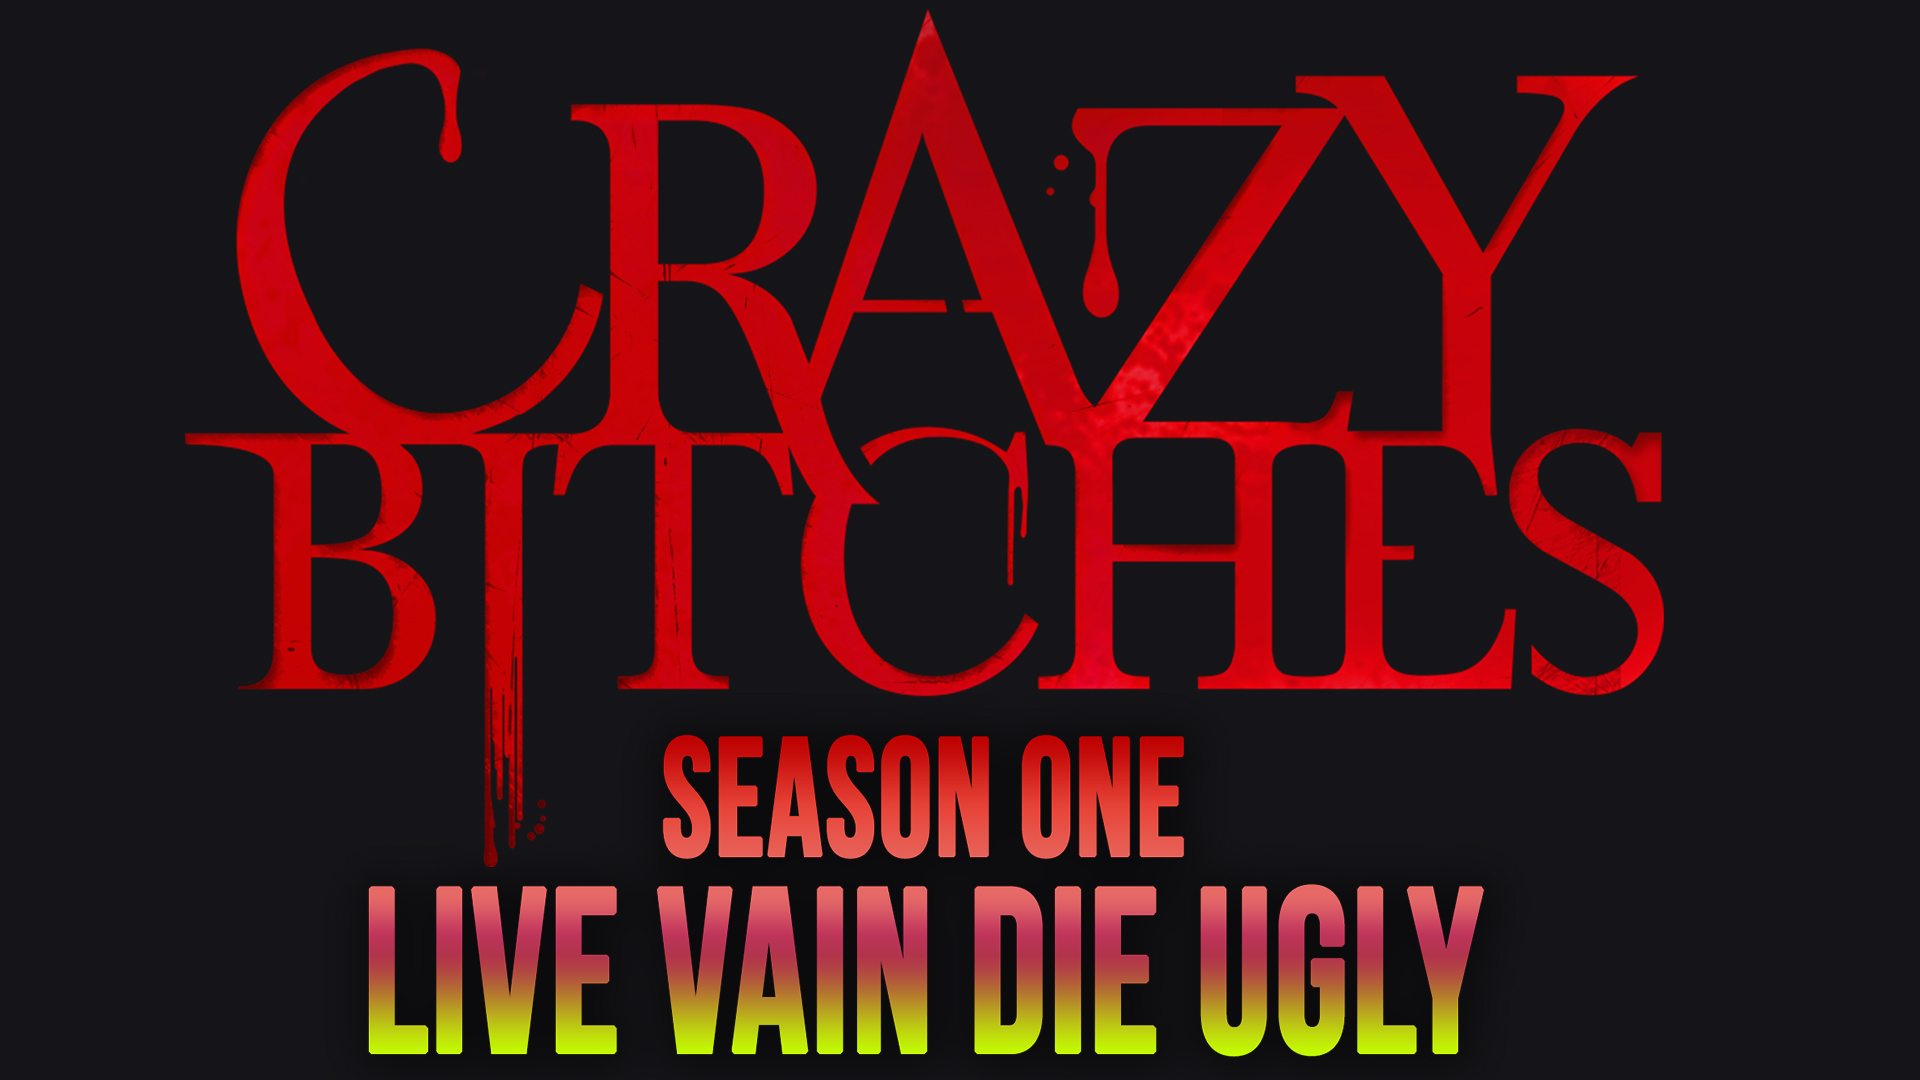 Crazy Bitches Season One